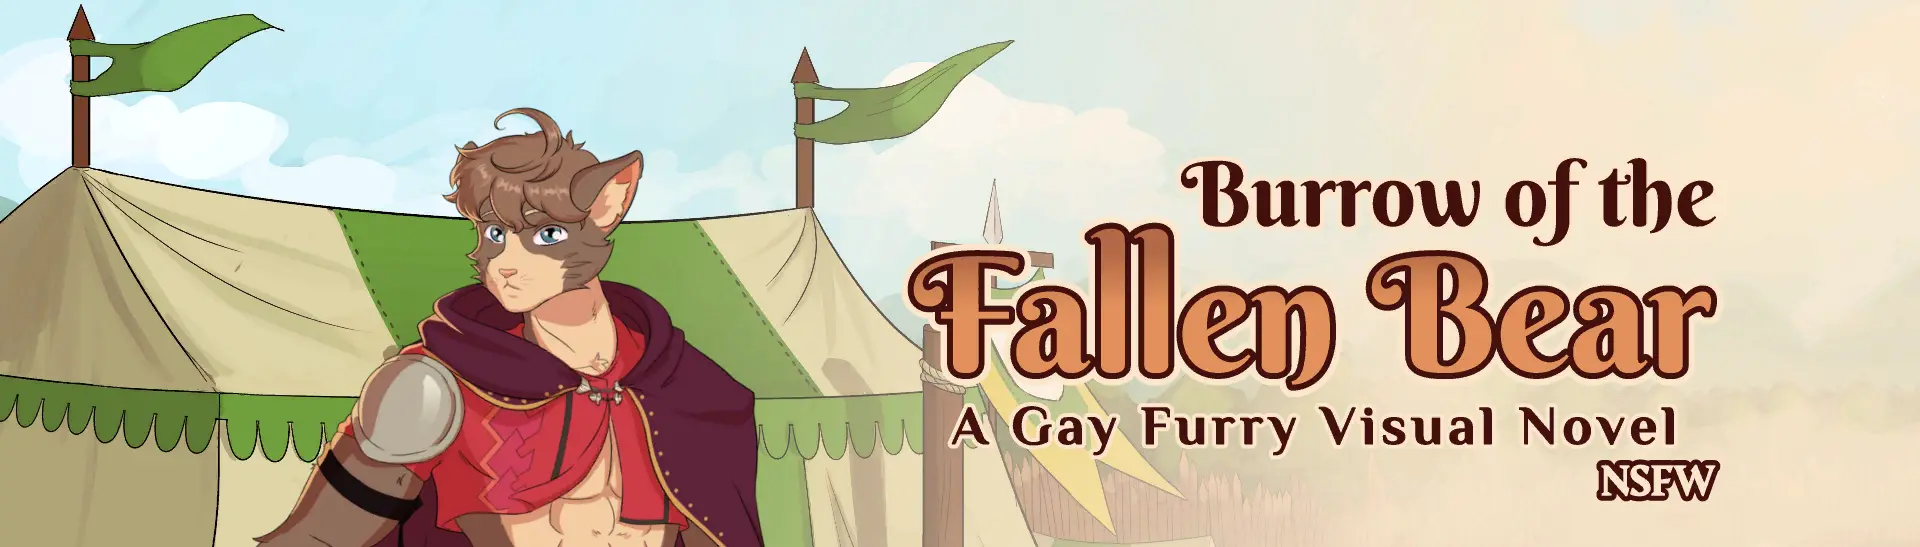 Burrow of the Fallen Bear: A Gay Furry Visual Novel main image